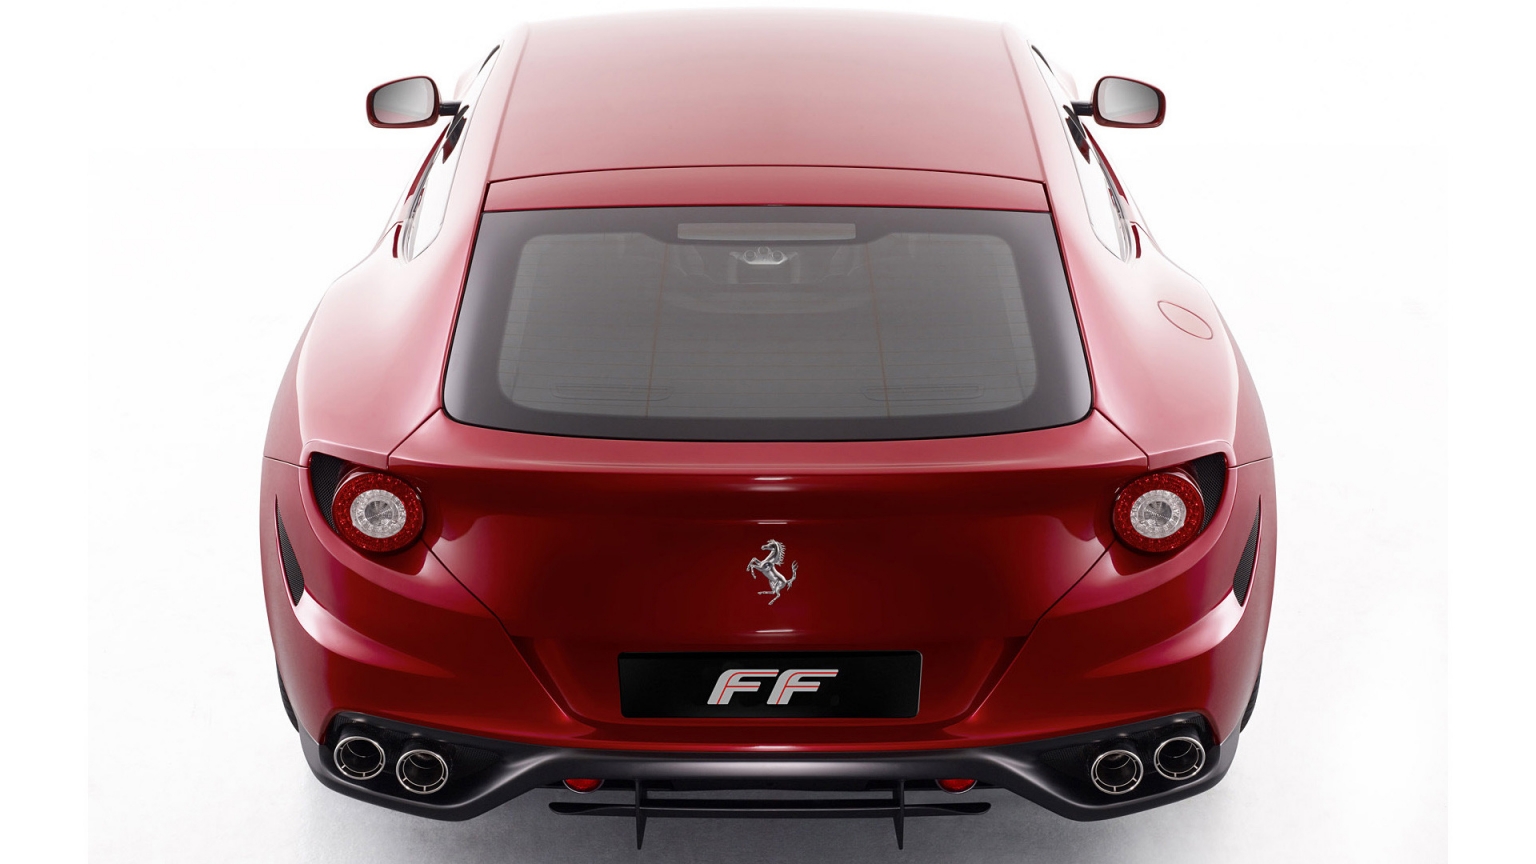 Ferrari FF Rear for 1536 x 864 HDTV resolution